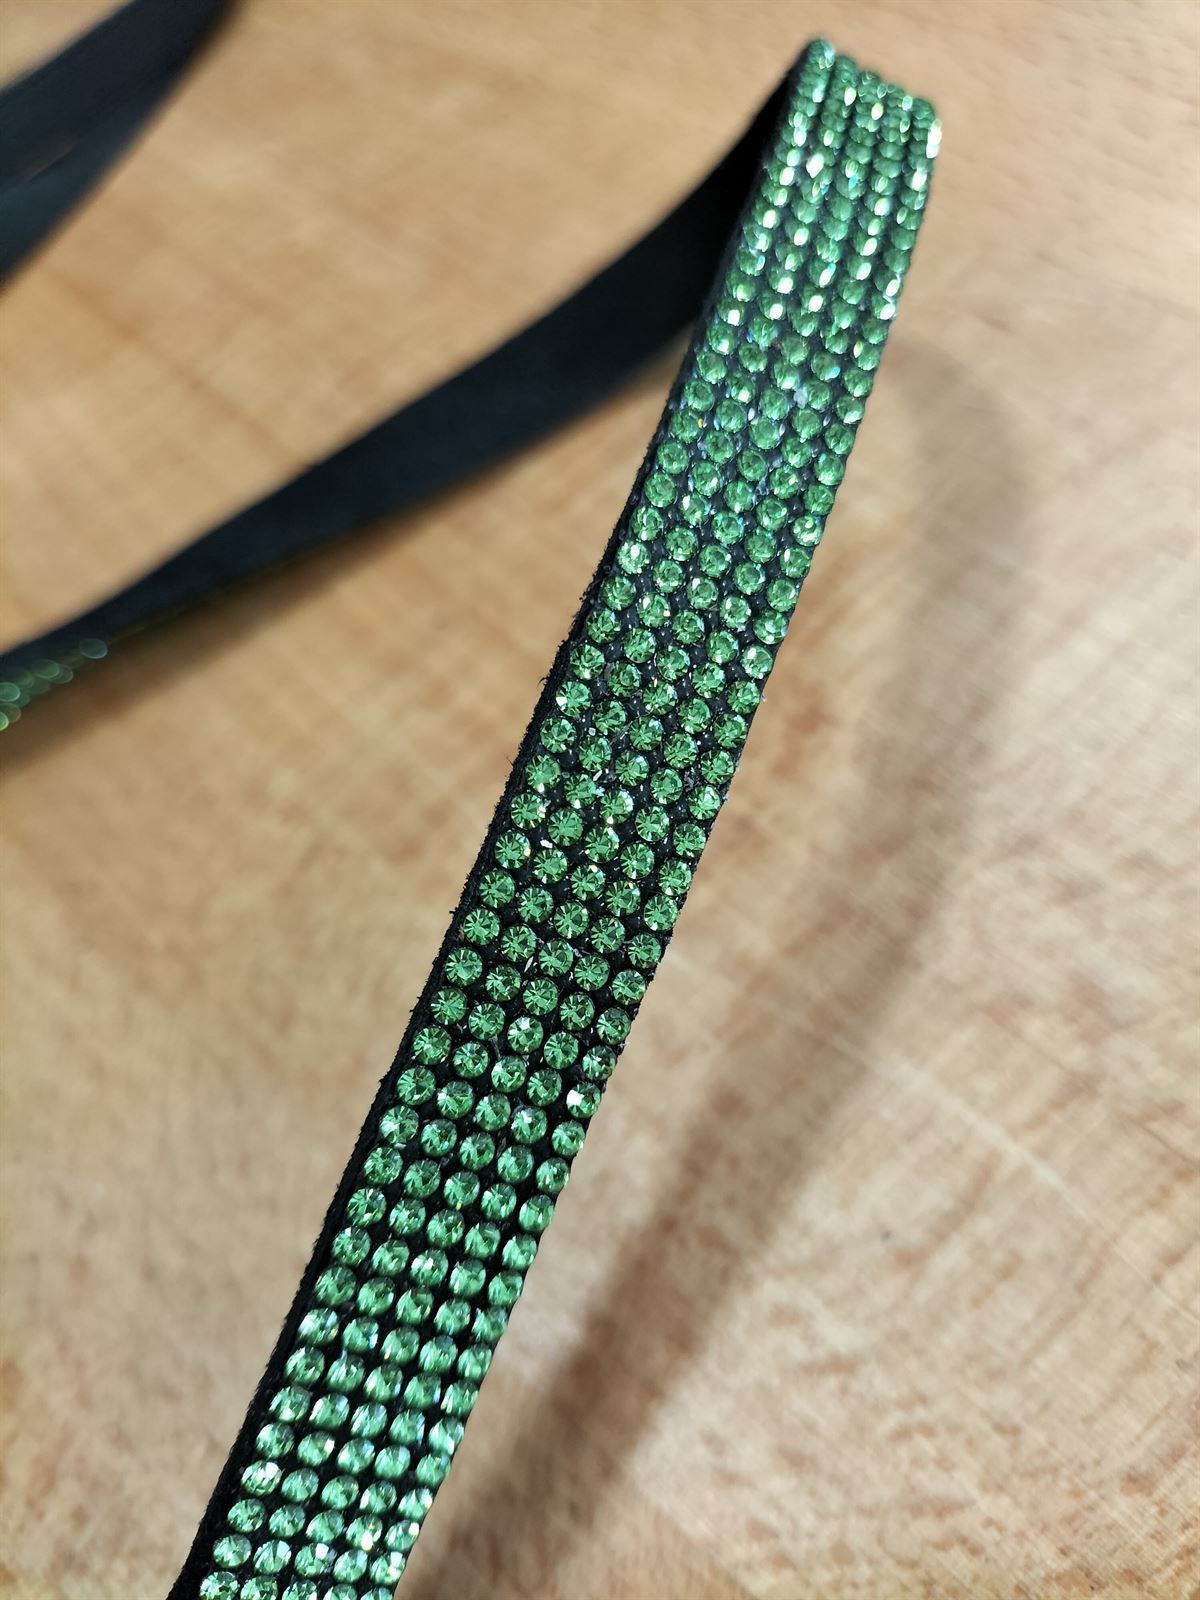 Adorno silla CASTECUS cinta decorativa trasera cristales verdes - Imagen 4